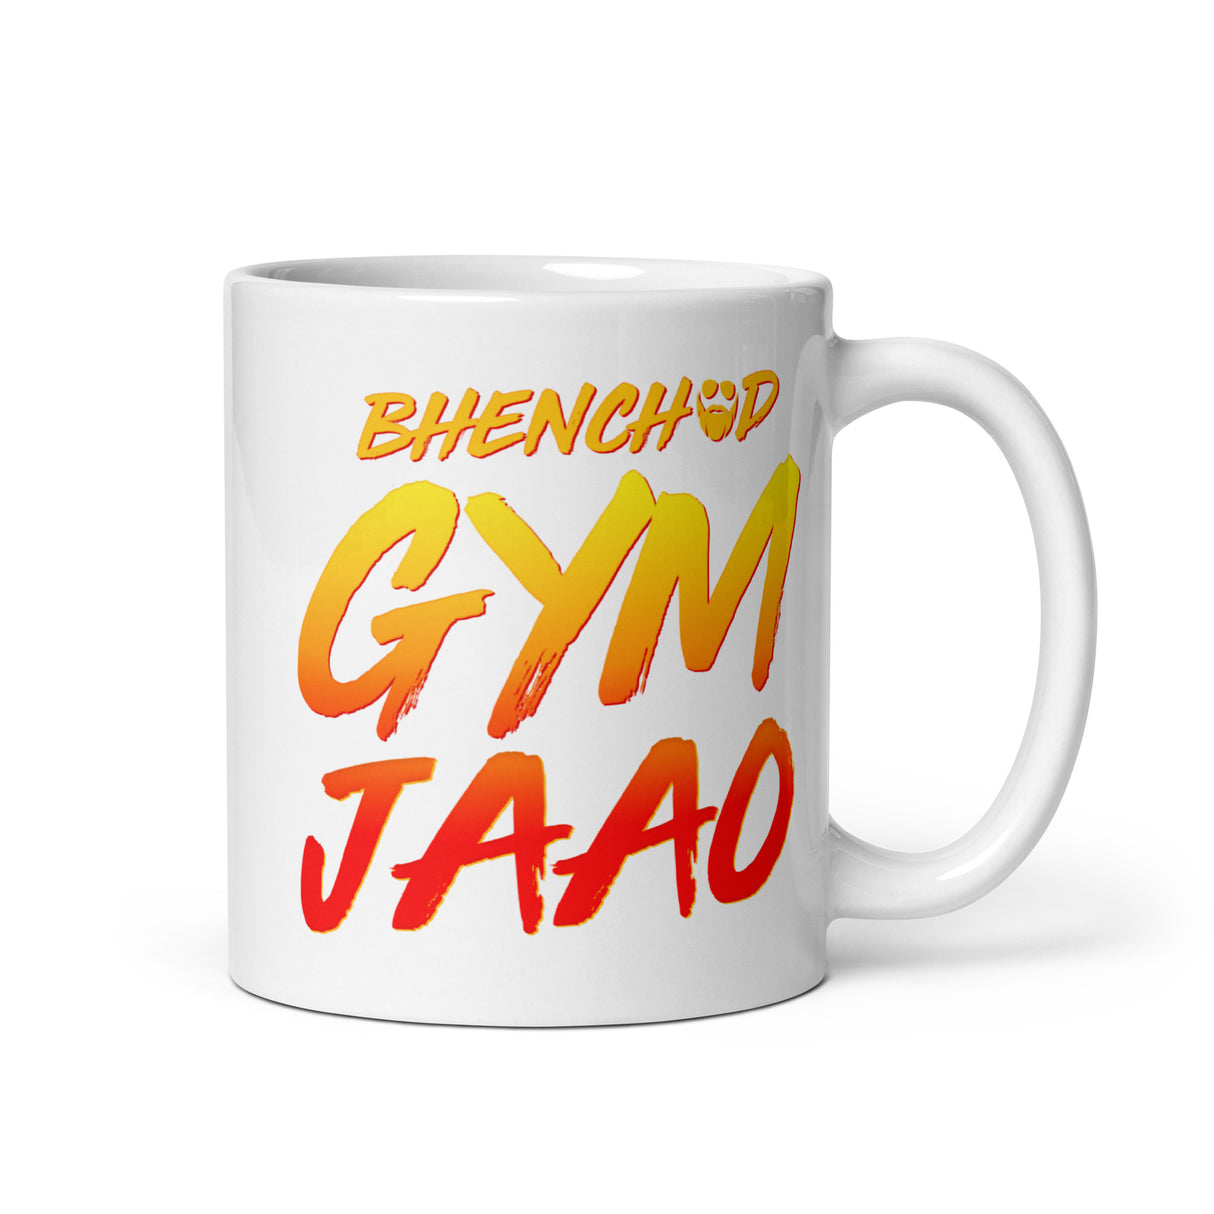 Bhenchod Gym Jaao Mug